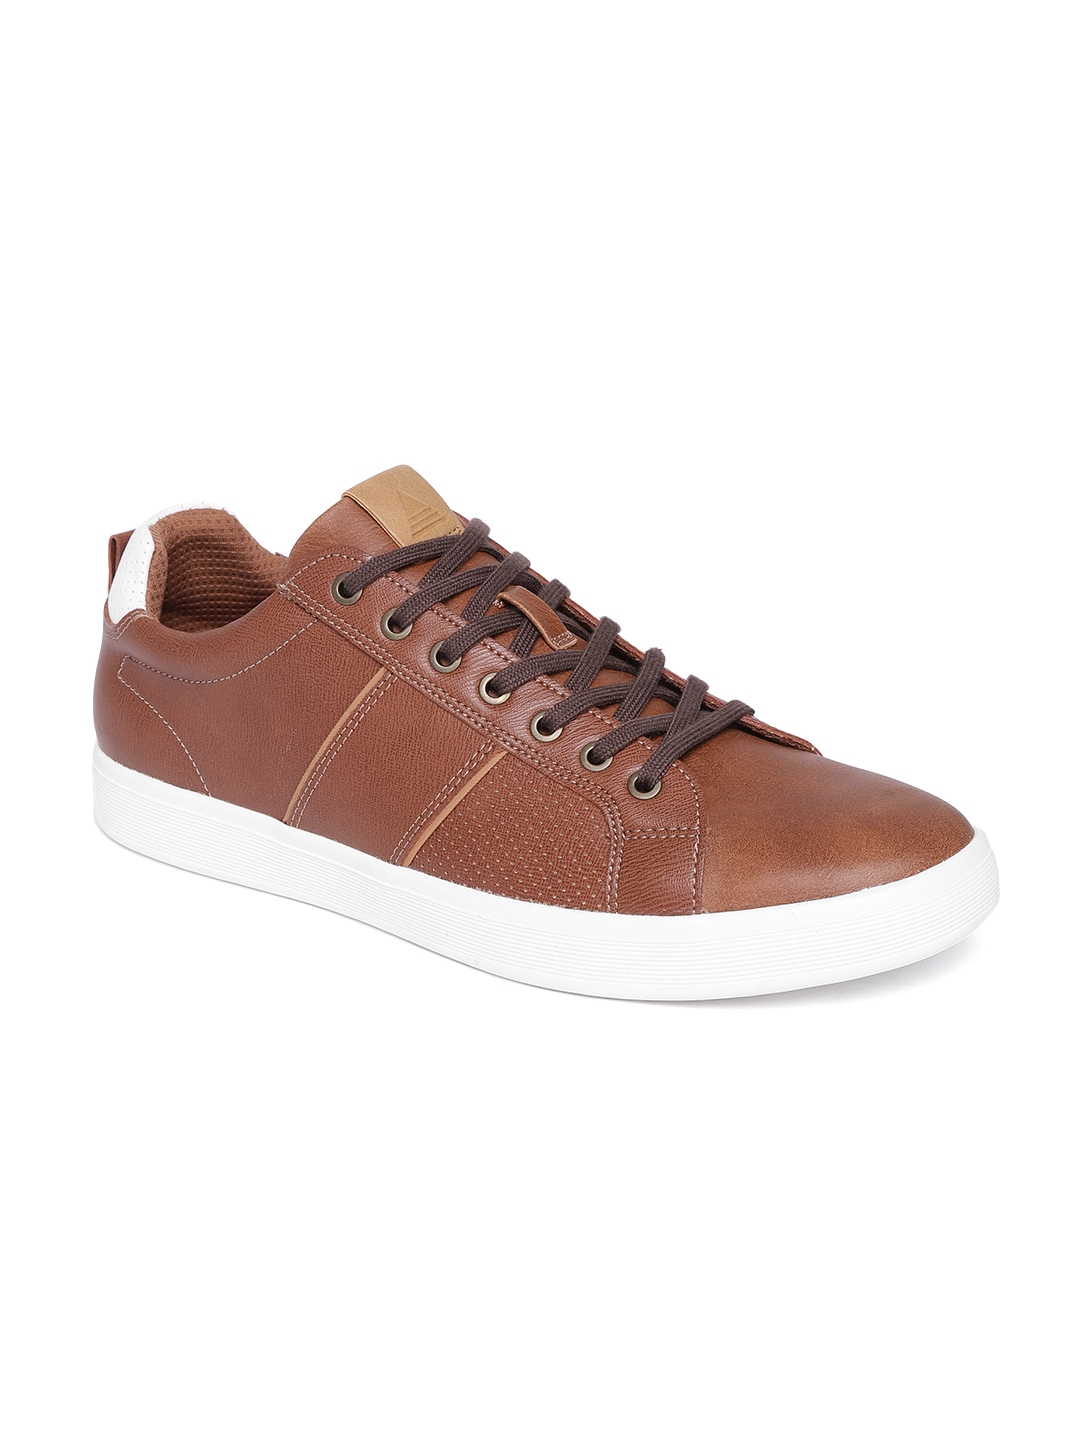 Buy ALDO Men Brown Sneakers - Casual Shoes for Men 7373934 | Myntra